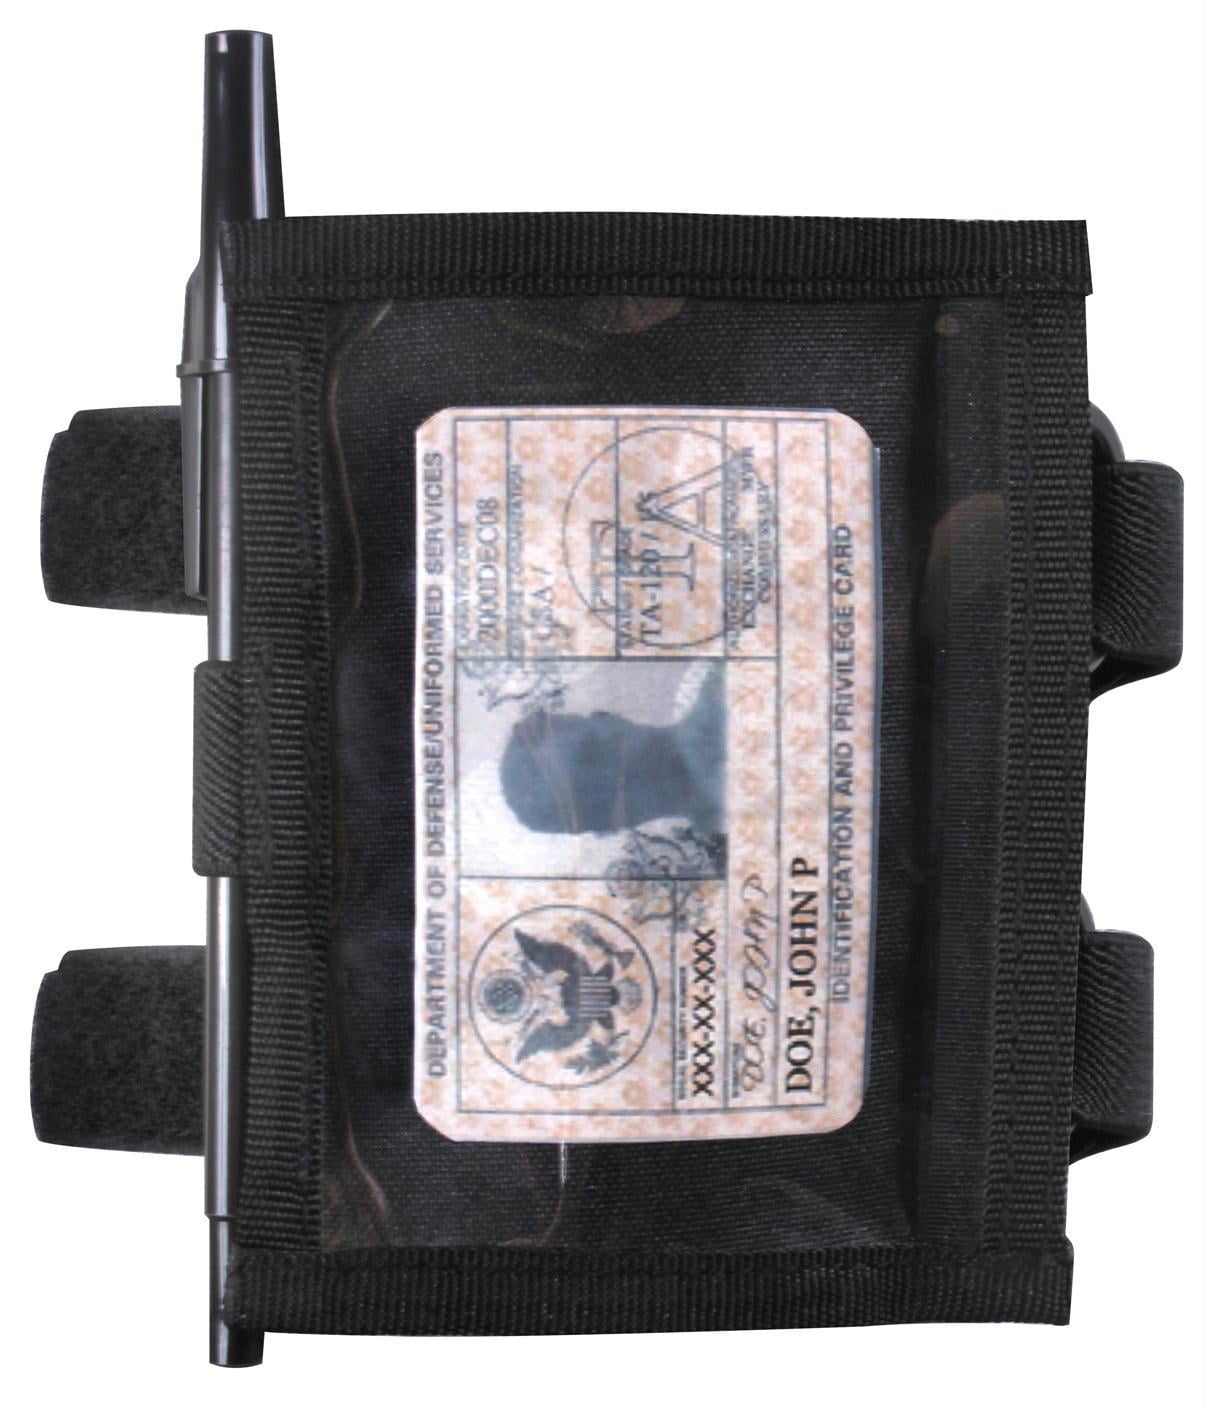 Beste Rothco Military Style Armband ID Holder - Black - Walmart.com ZW-06